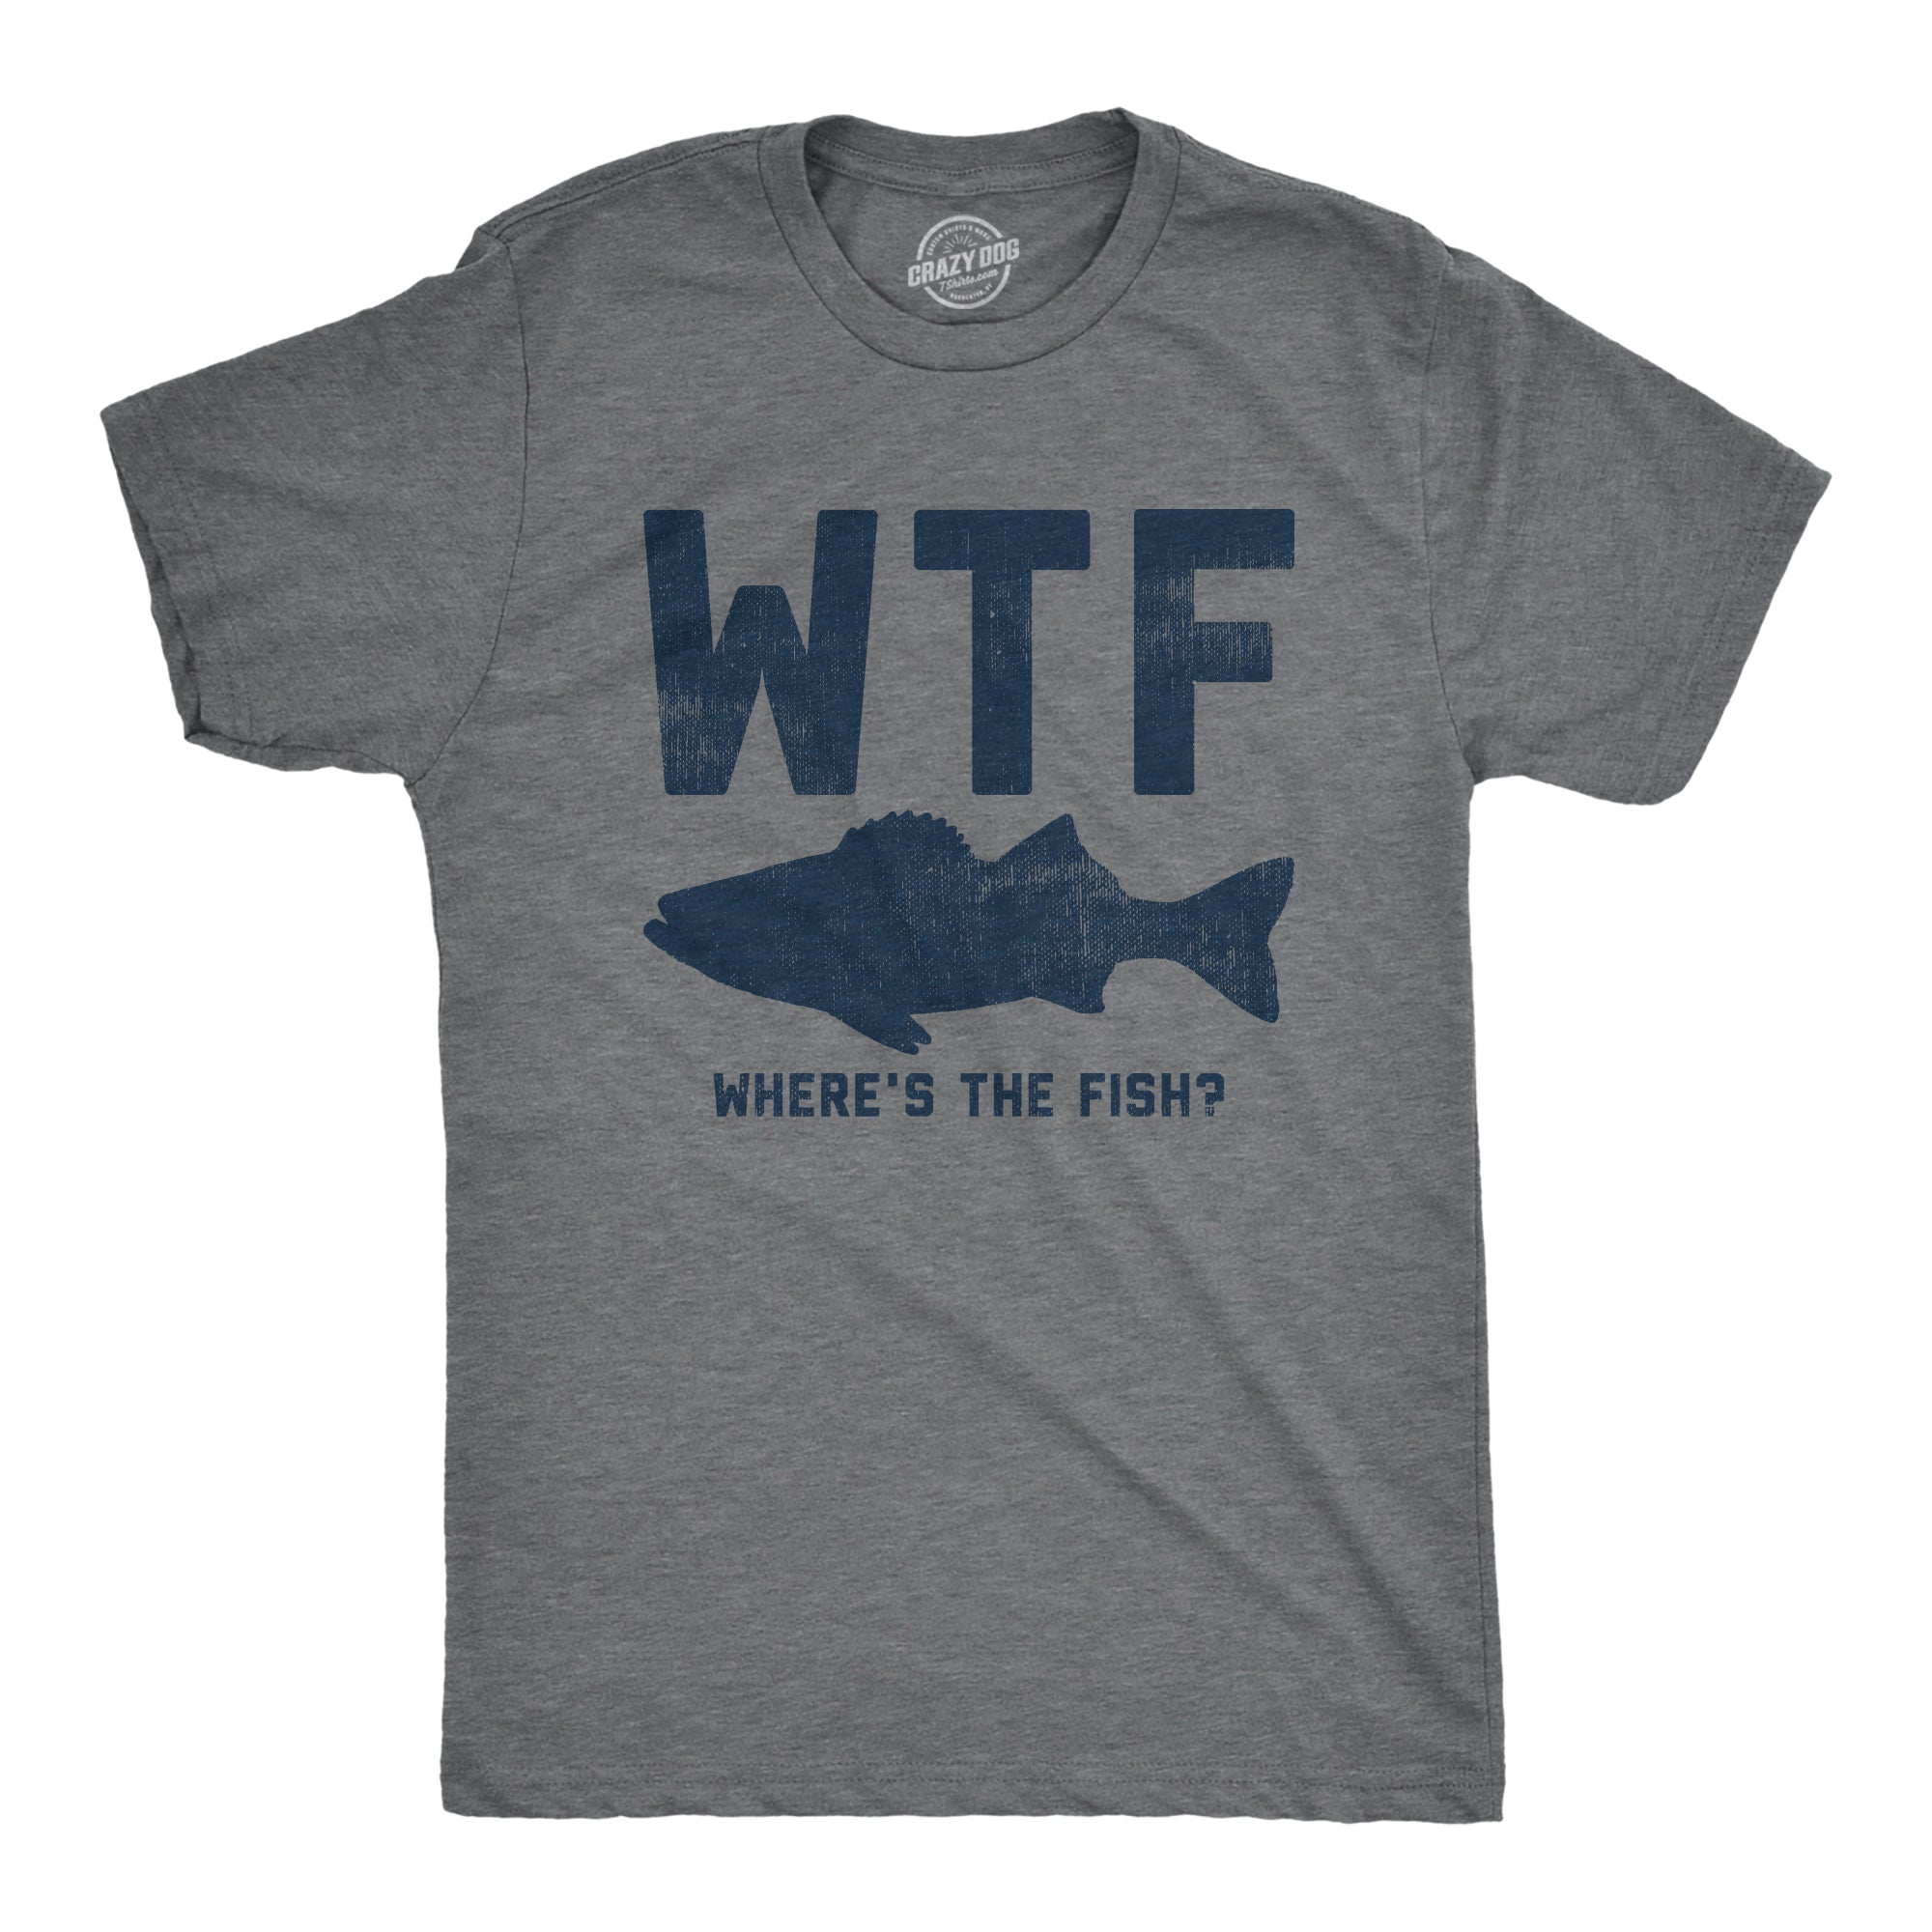 DAD IS THE NAME FISHING BEST FISHING DESIGN Men's Premium Longsleeve Shirt